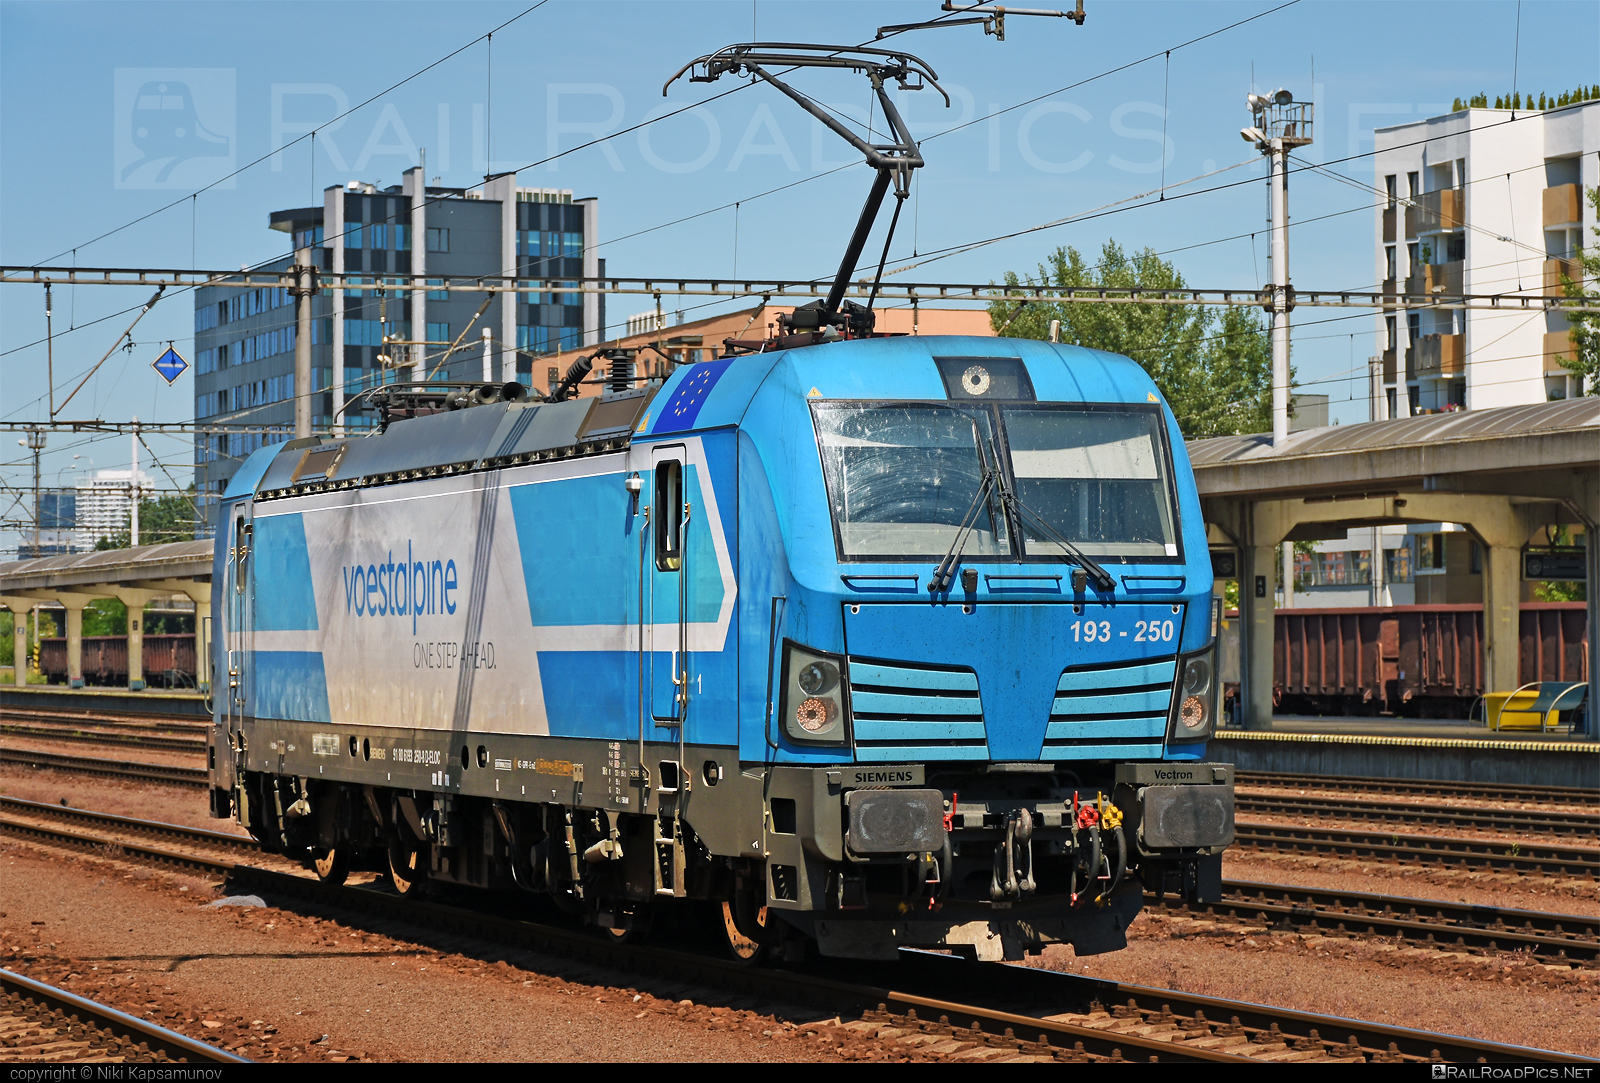 Siemens Vectron AC - 193 250 operated by CargoServ GmbH #cargoserv #ell #ellgermany #eloc #europeanlocomotiveleasing #siemens #siemensvectron #siemensvectronac #vectron #vectronac #voestalpine